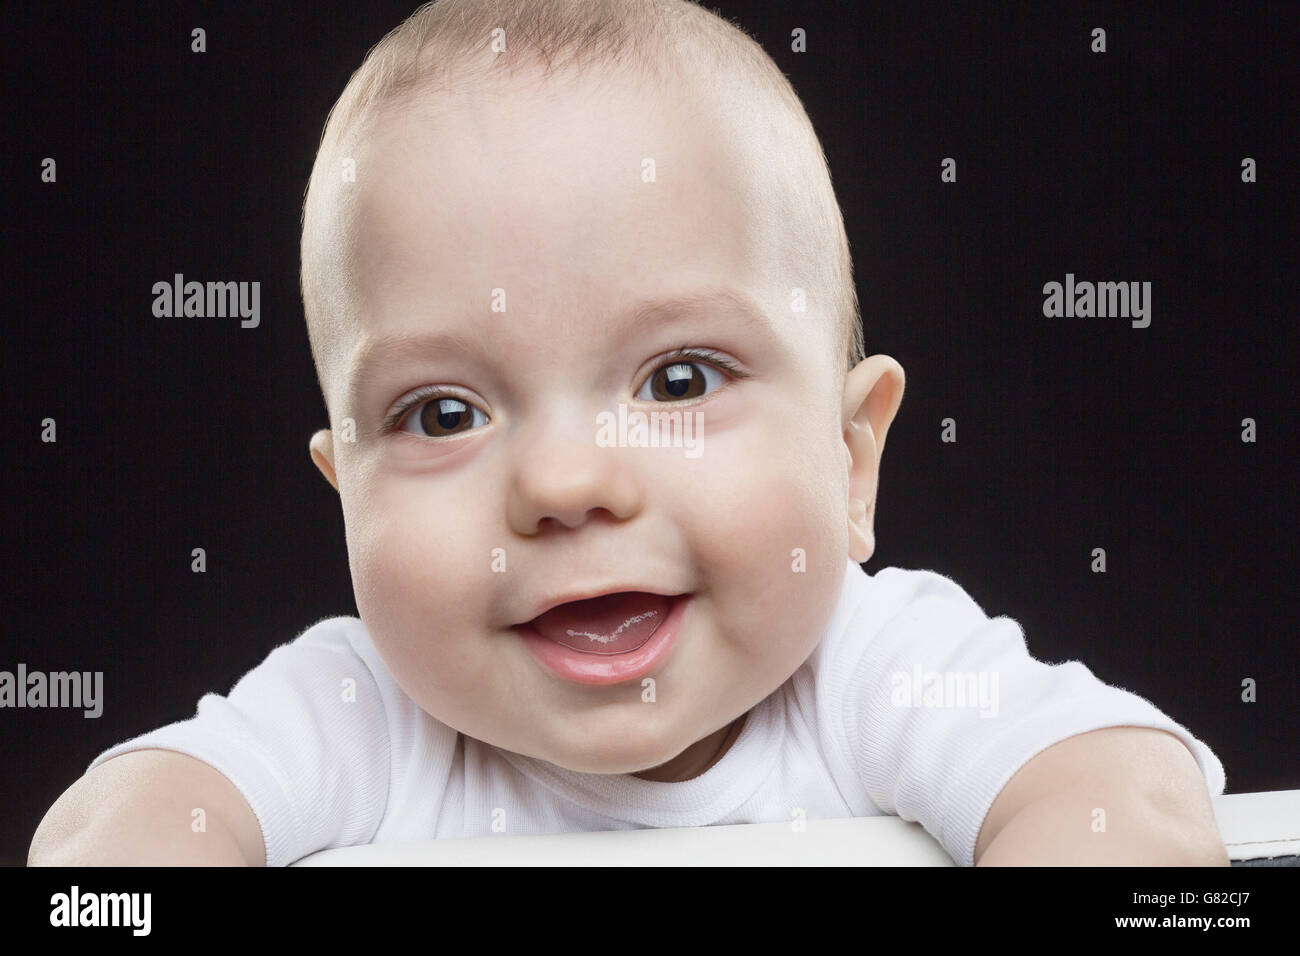 Portrait of happy baby boy against black background Stock Photo